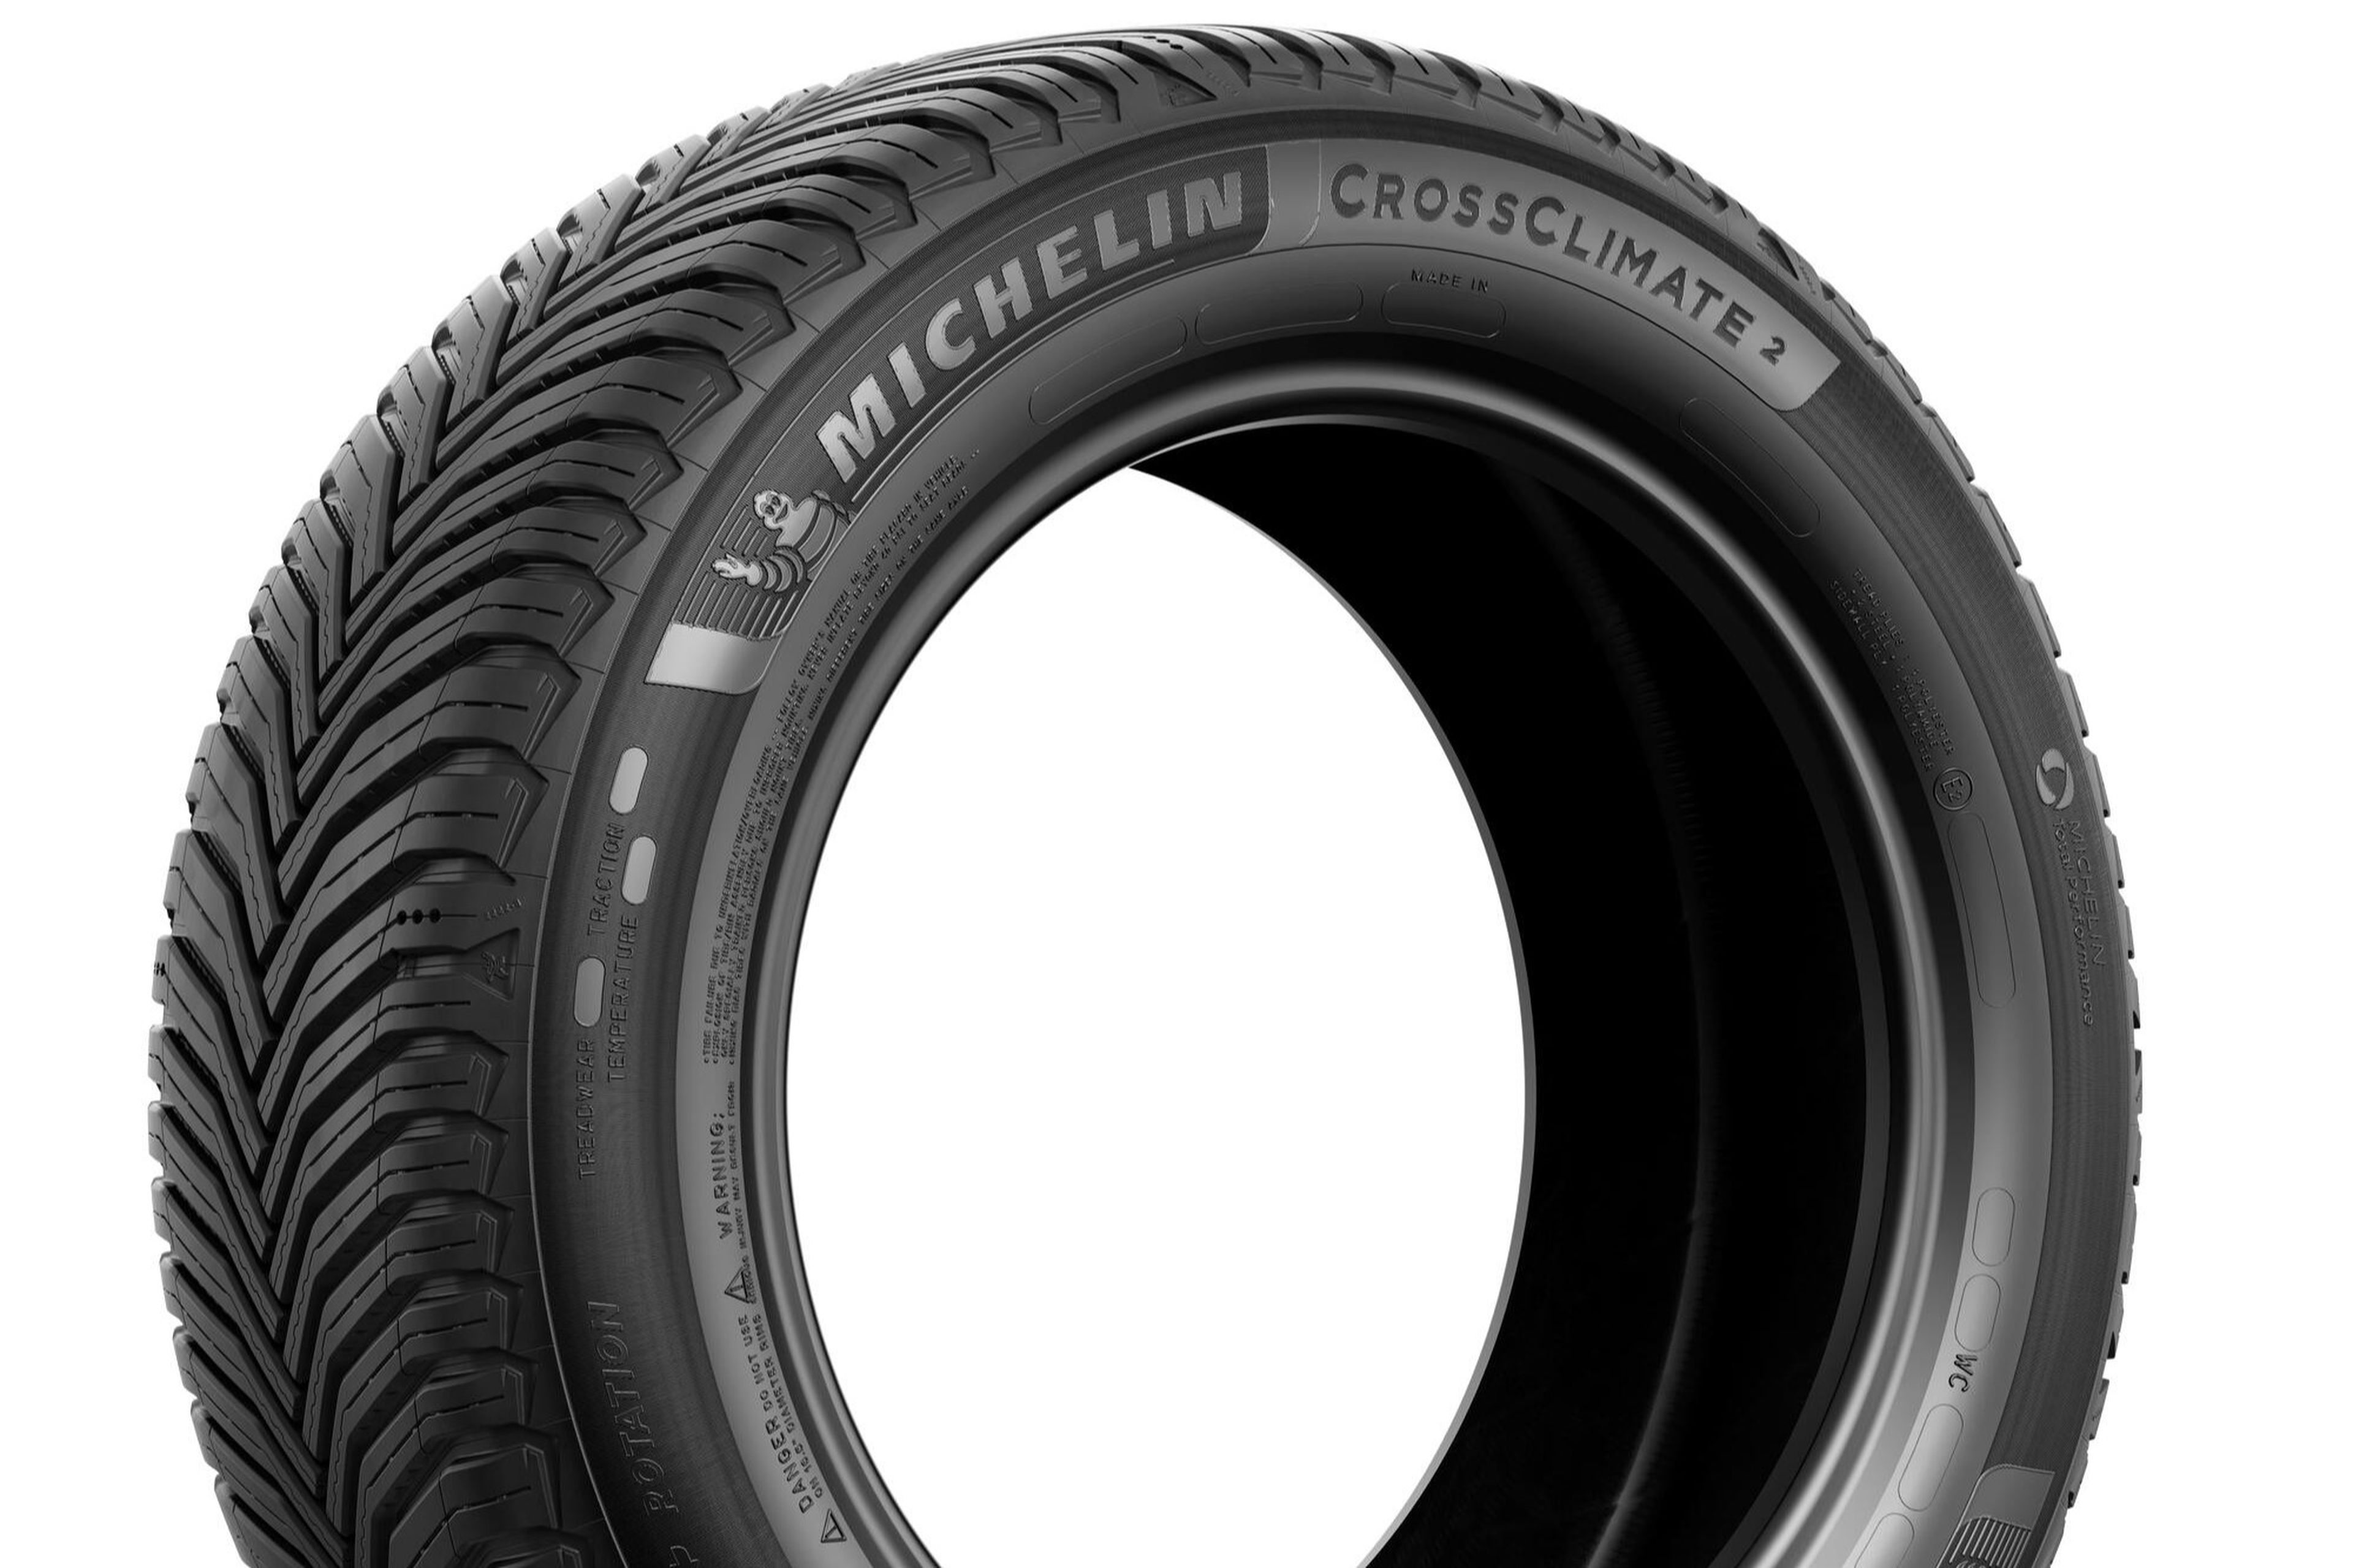 Neumáticos Michelin CrossClimate